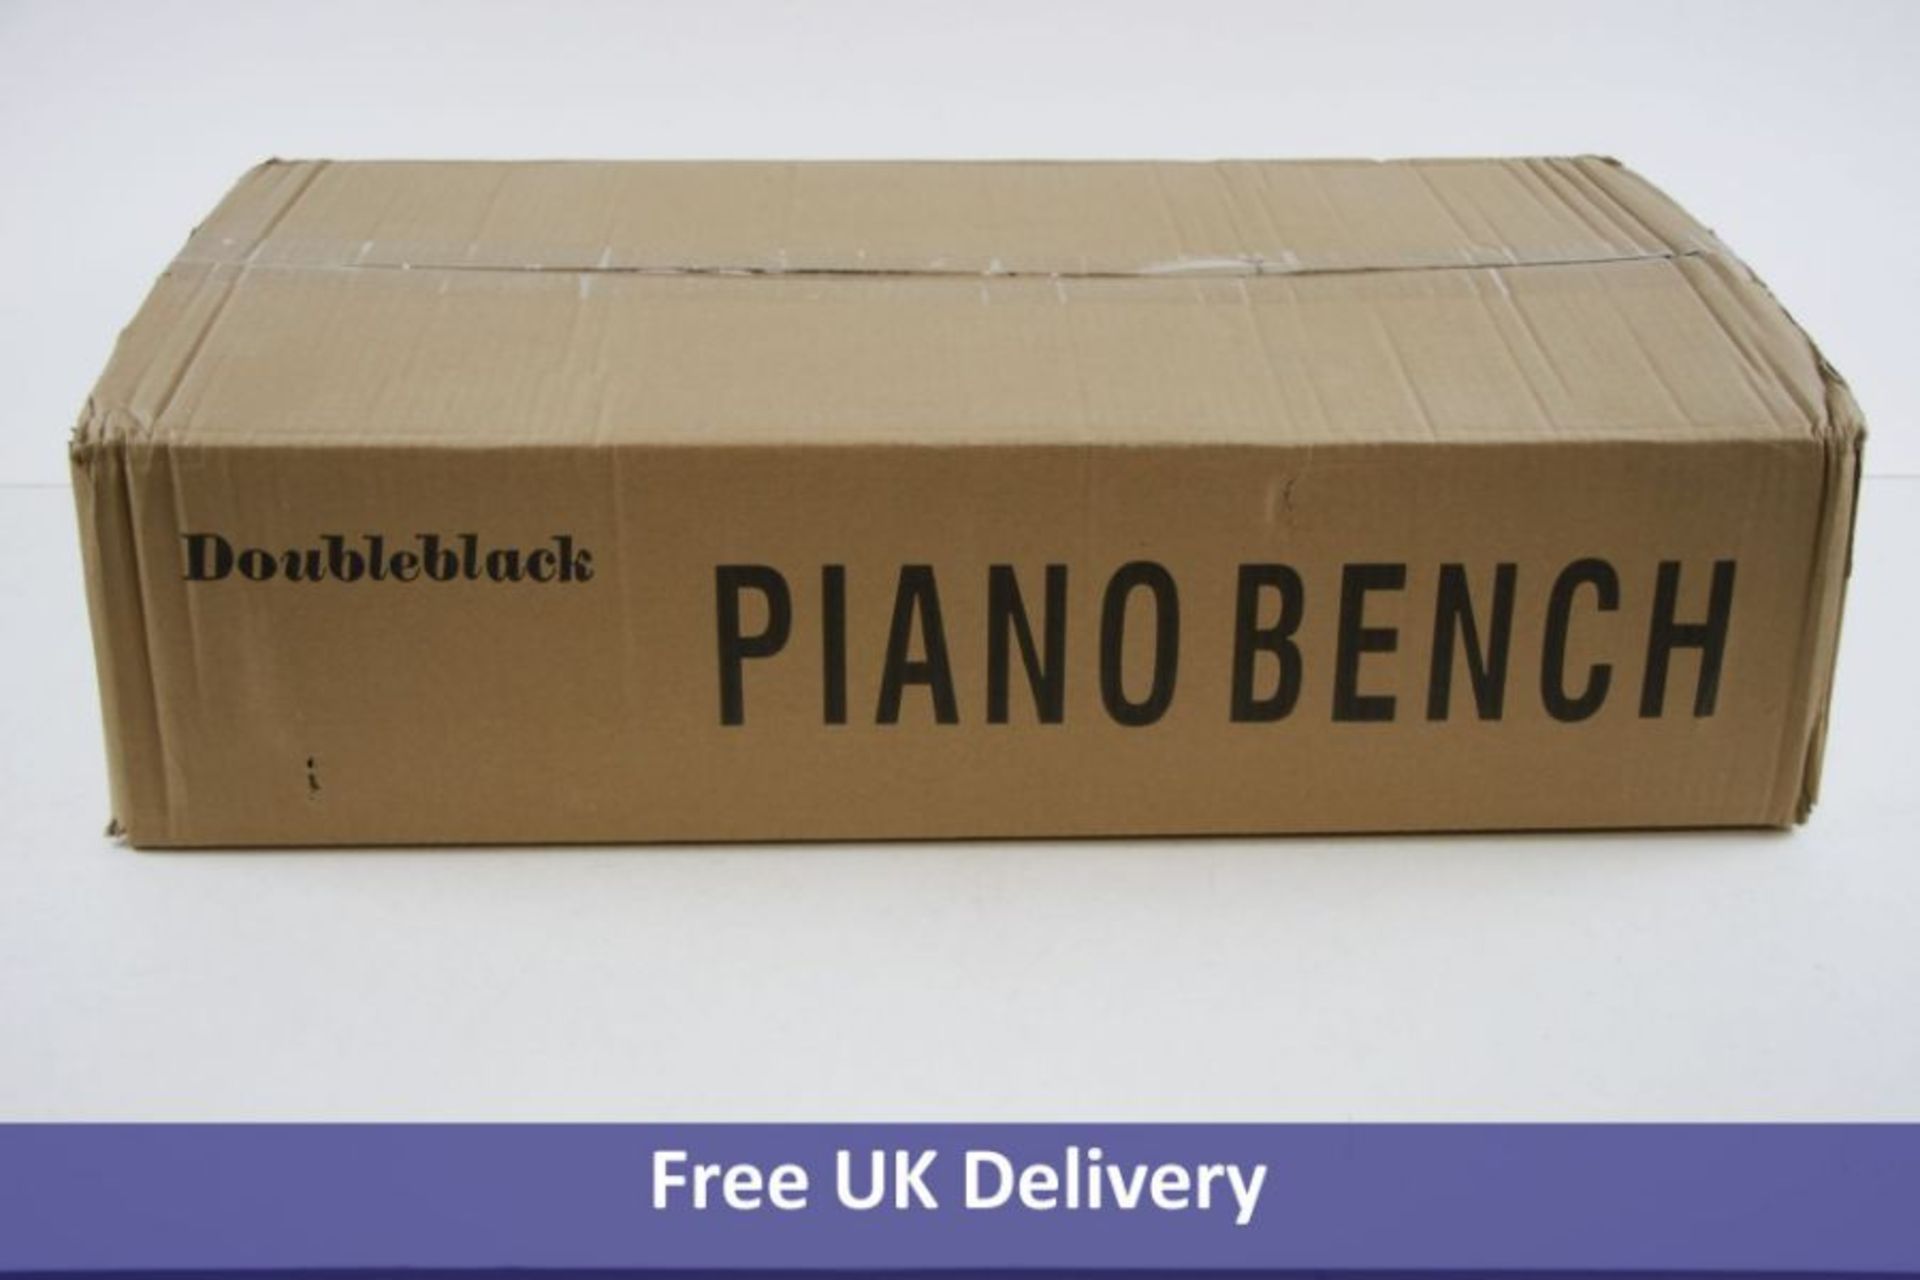 Doubleblack Piano Bench, 68x34x16.5cm, Brown